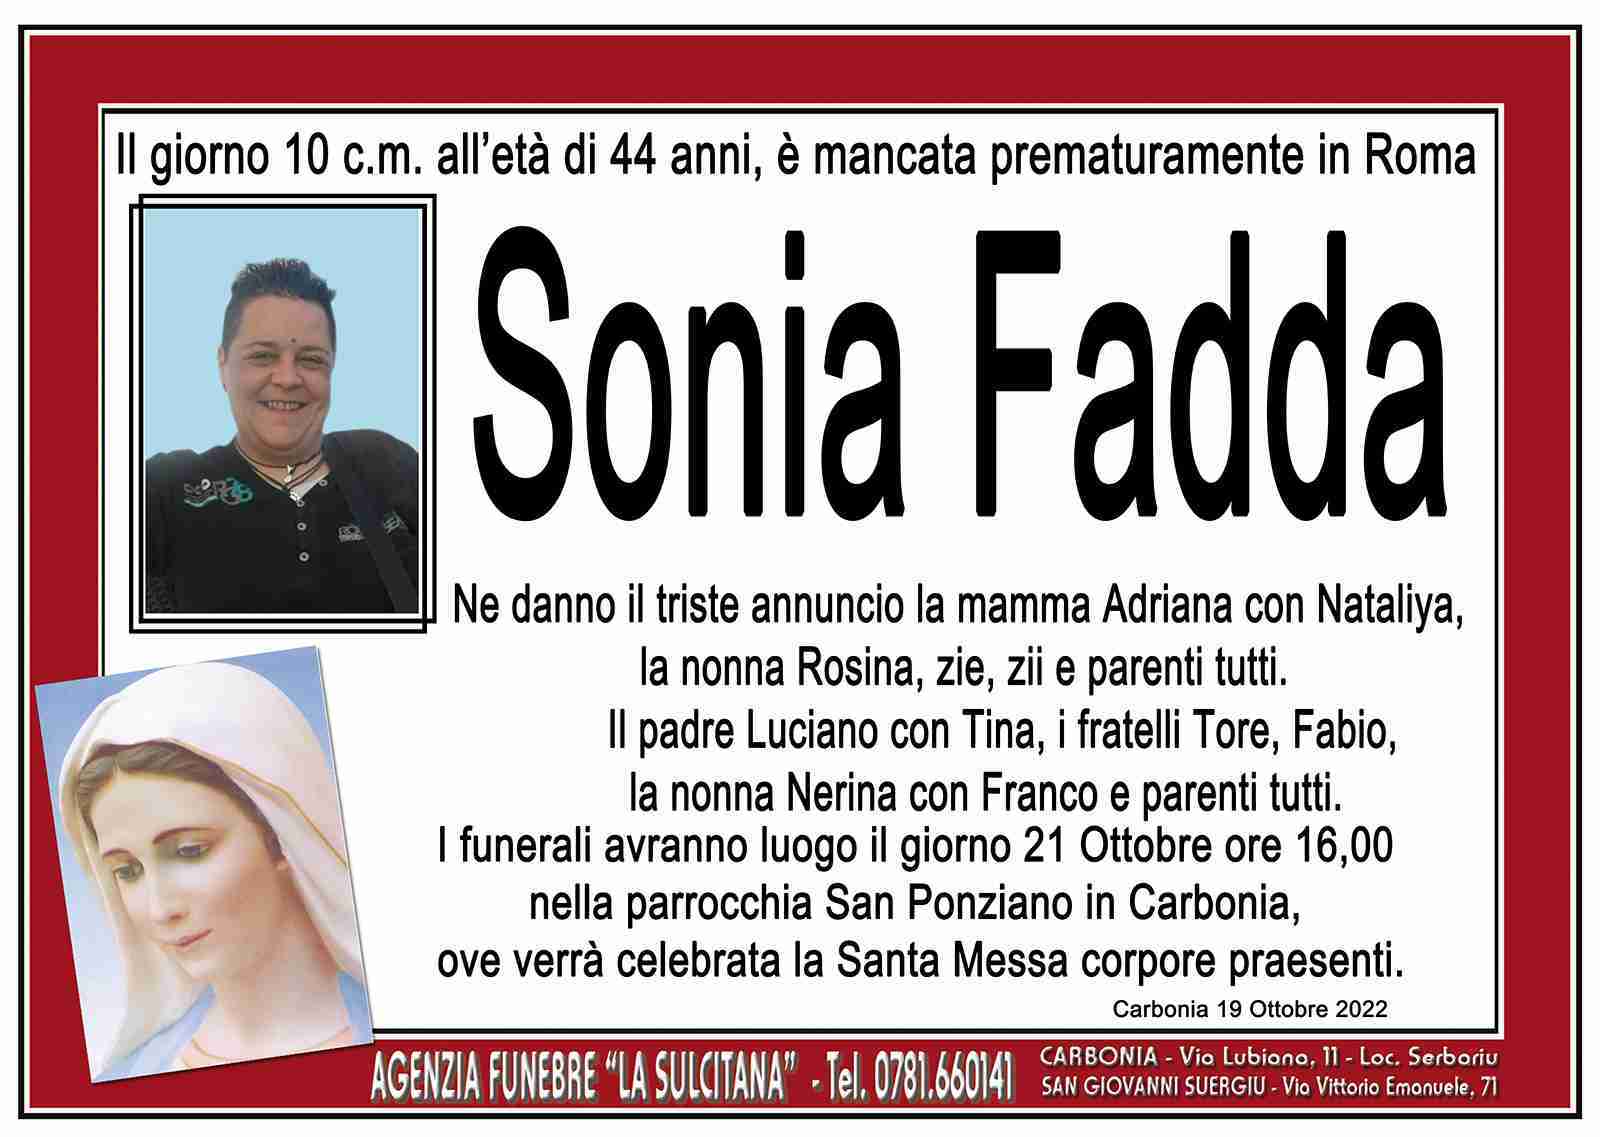 Sonia Fadda